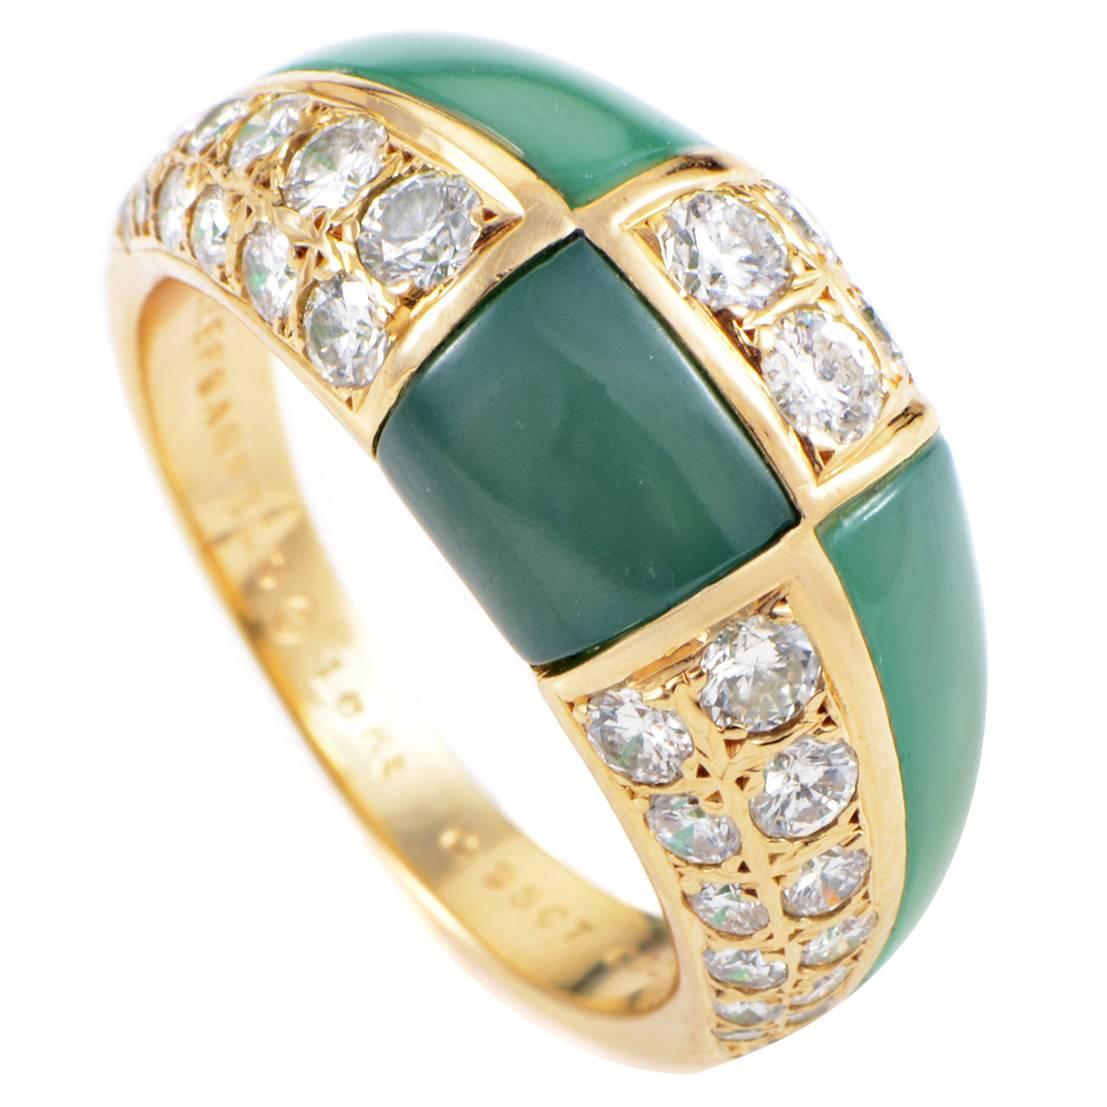 Van Cleef & Arpels Tiled Chrysoprase Diamond Gold Ring